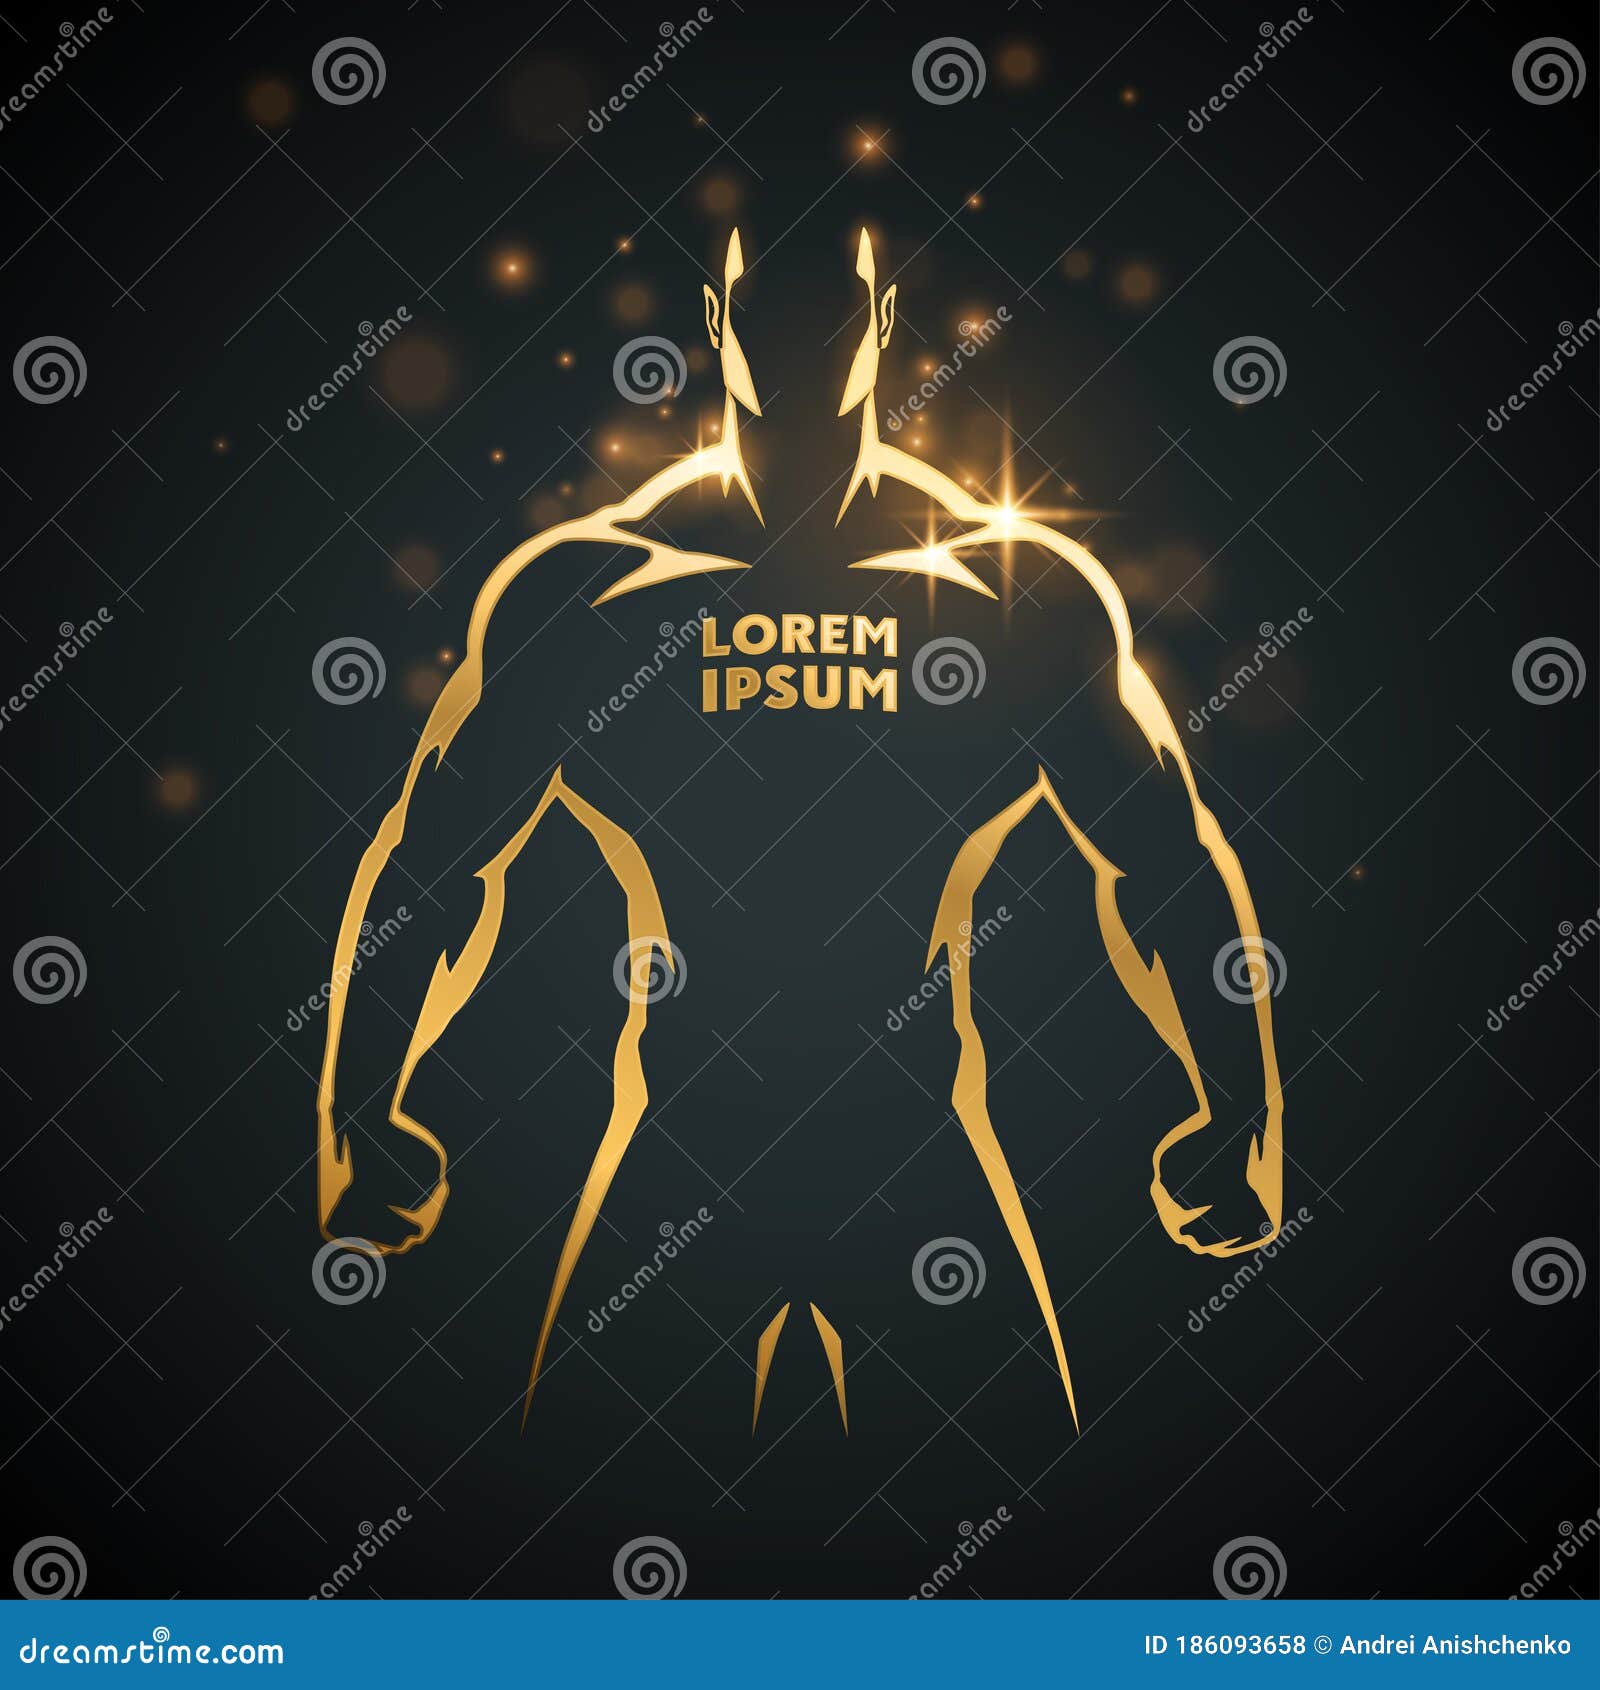 athlete man gold silhouette on black background